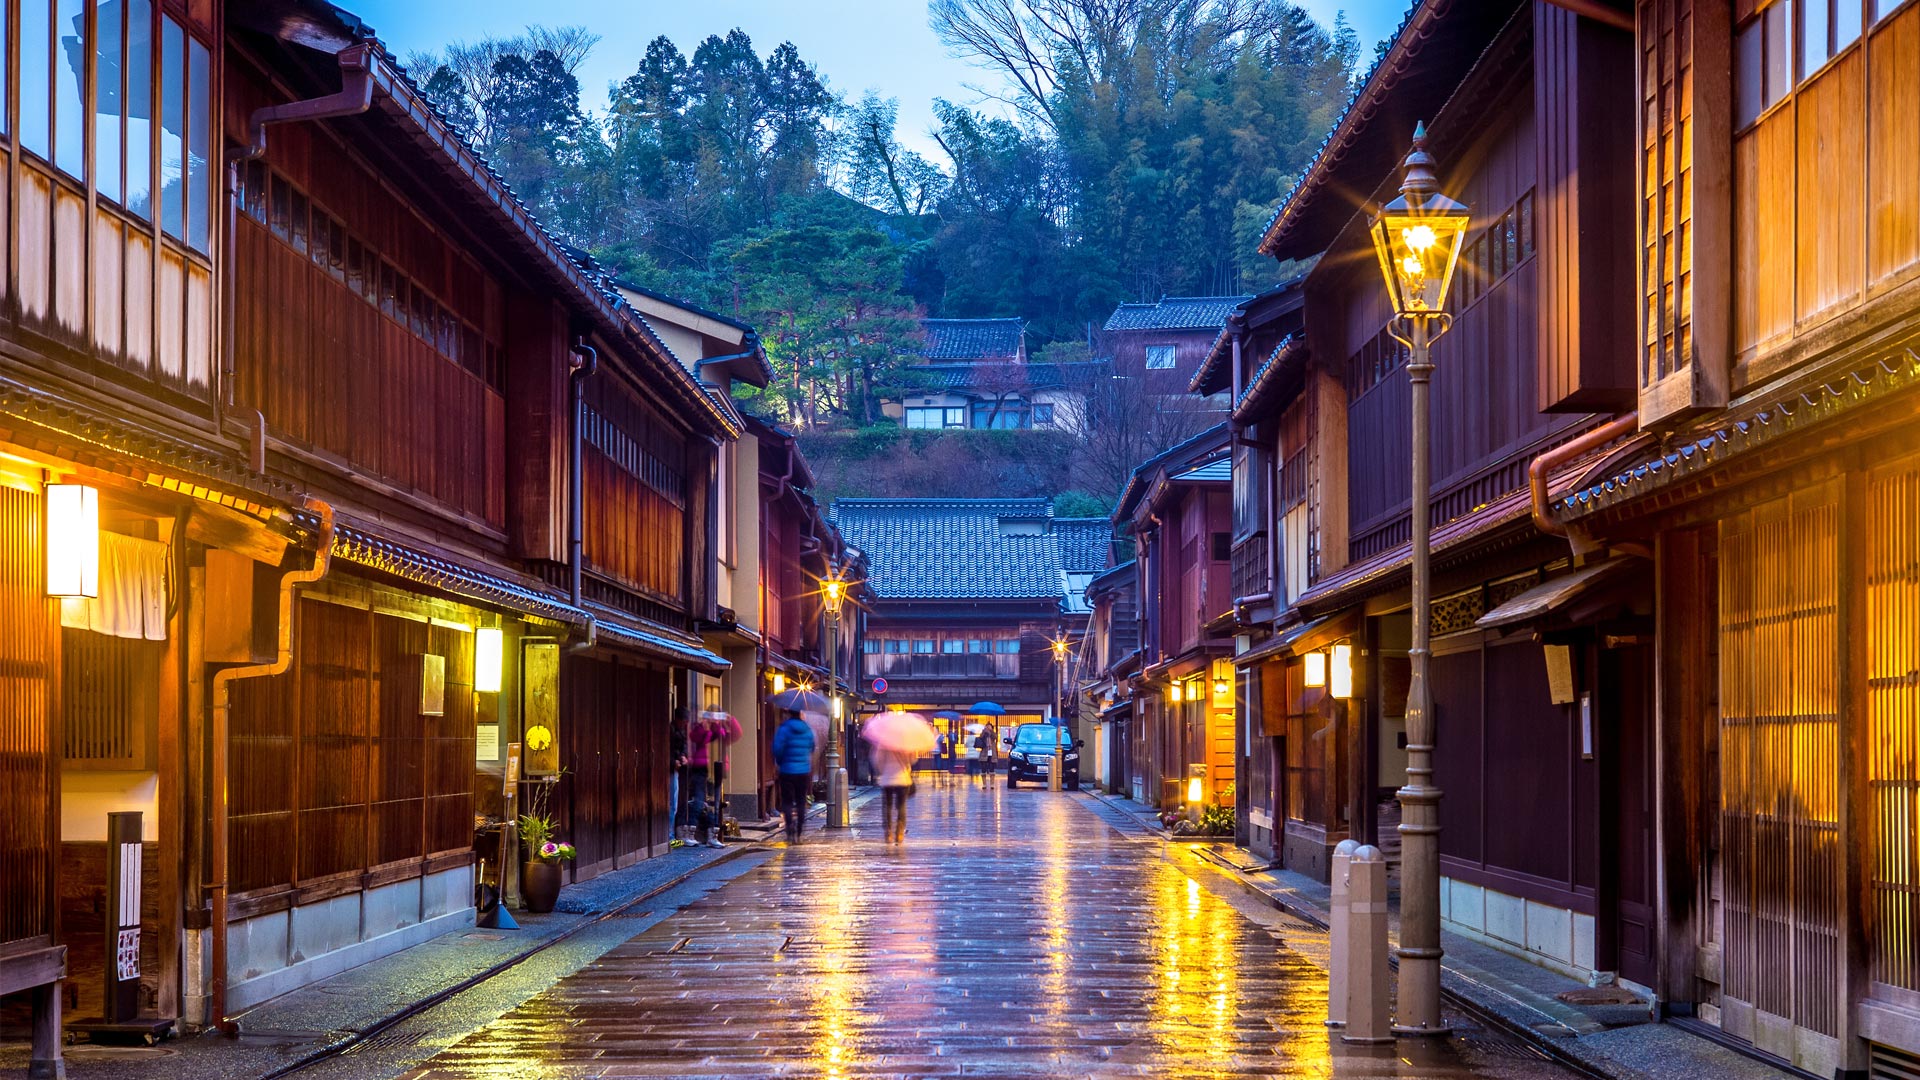 An image of a street in Ishikawa Japan